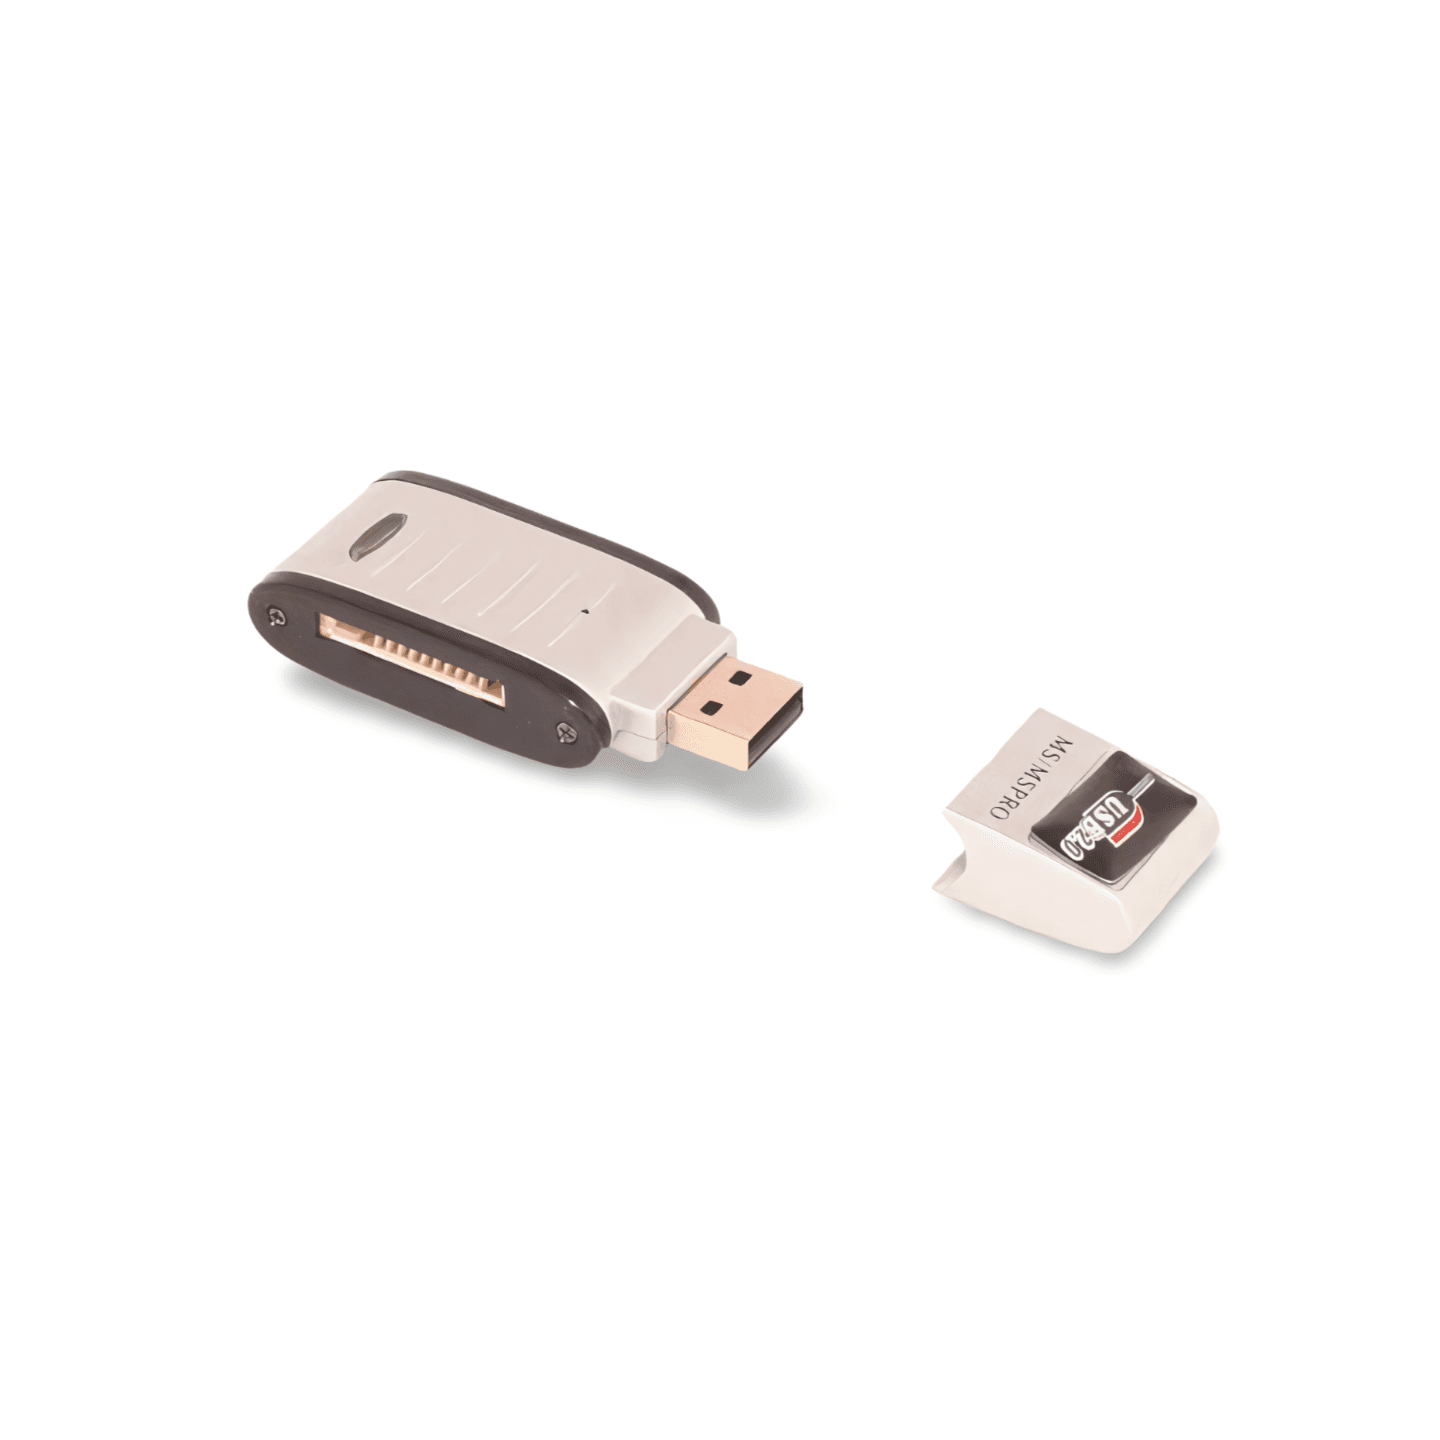 USB 2.0 Memory Stick Reader Memory Stick Pro silver